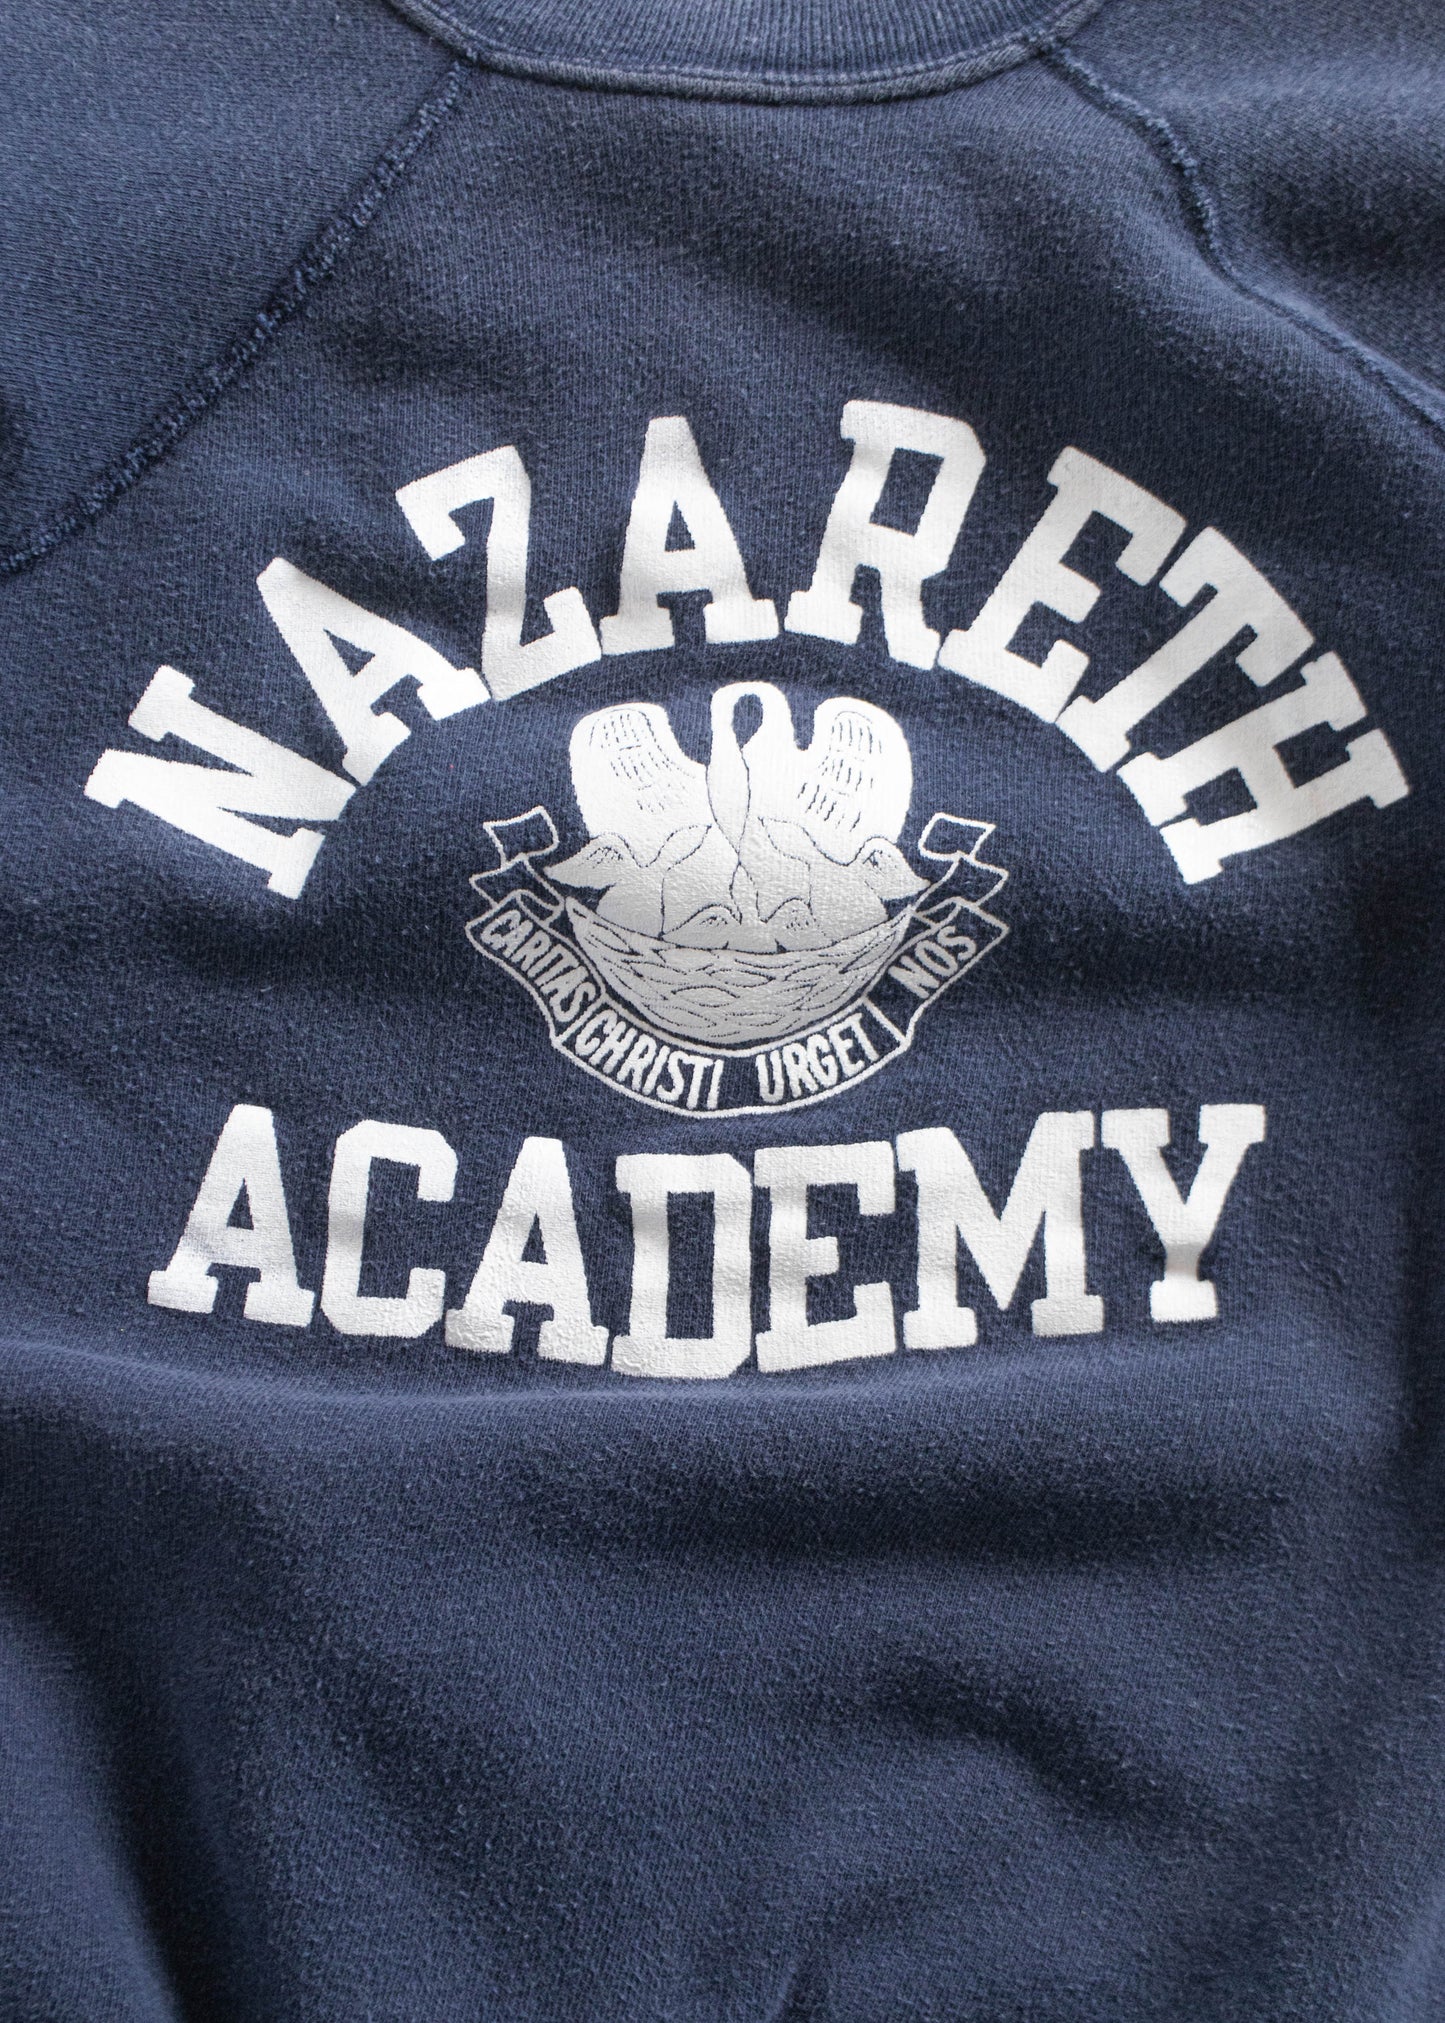 Vintage 1970s Champion Blue Bar Nazareth Academy Souvenir Sweatshirt Size XS/S